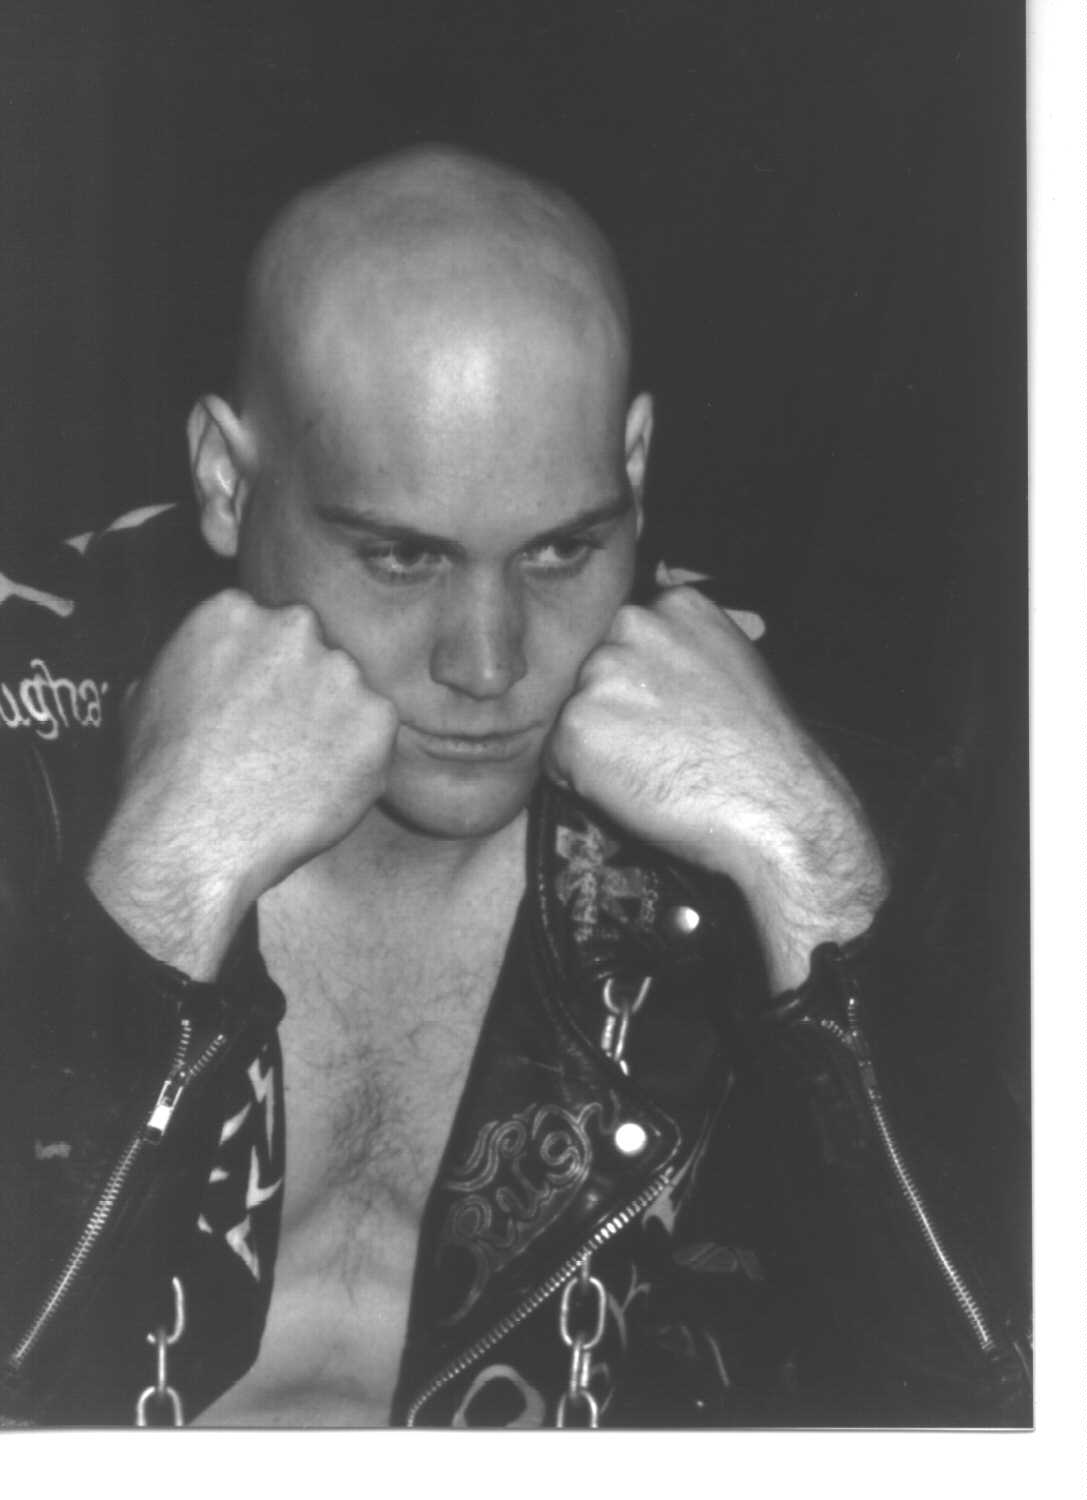 Hawke with shaved head in biker jacket.